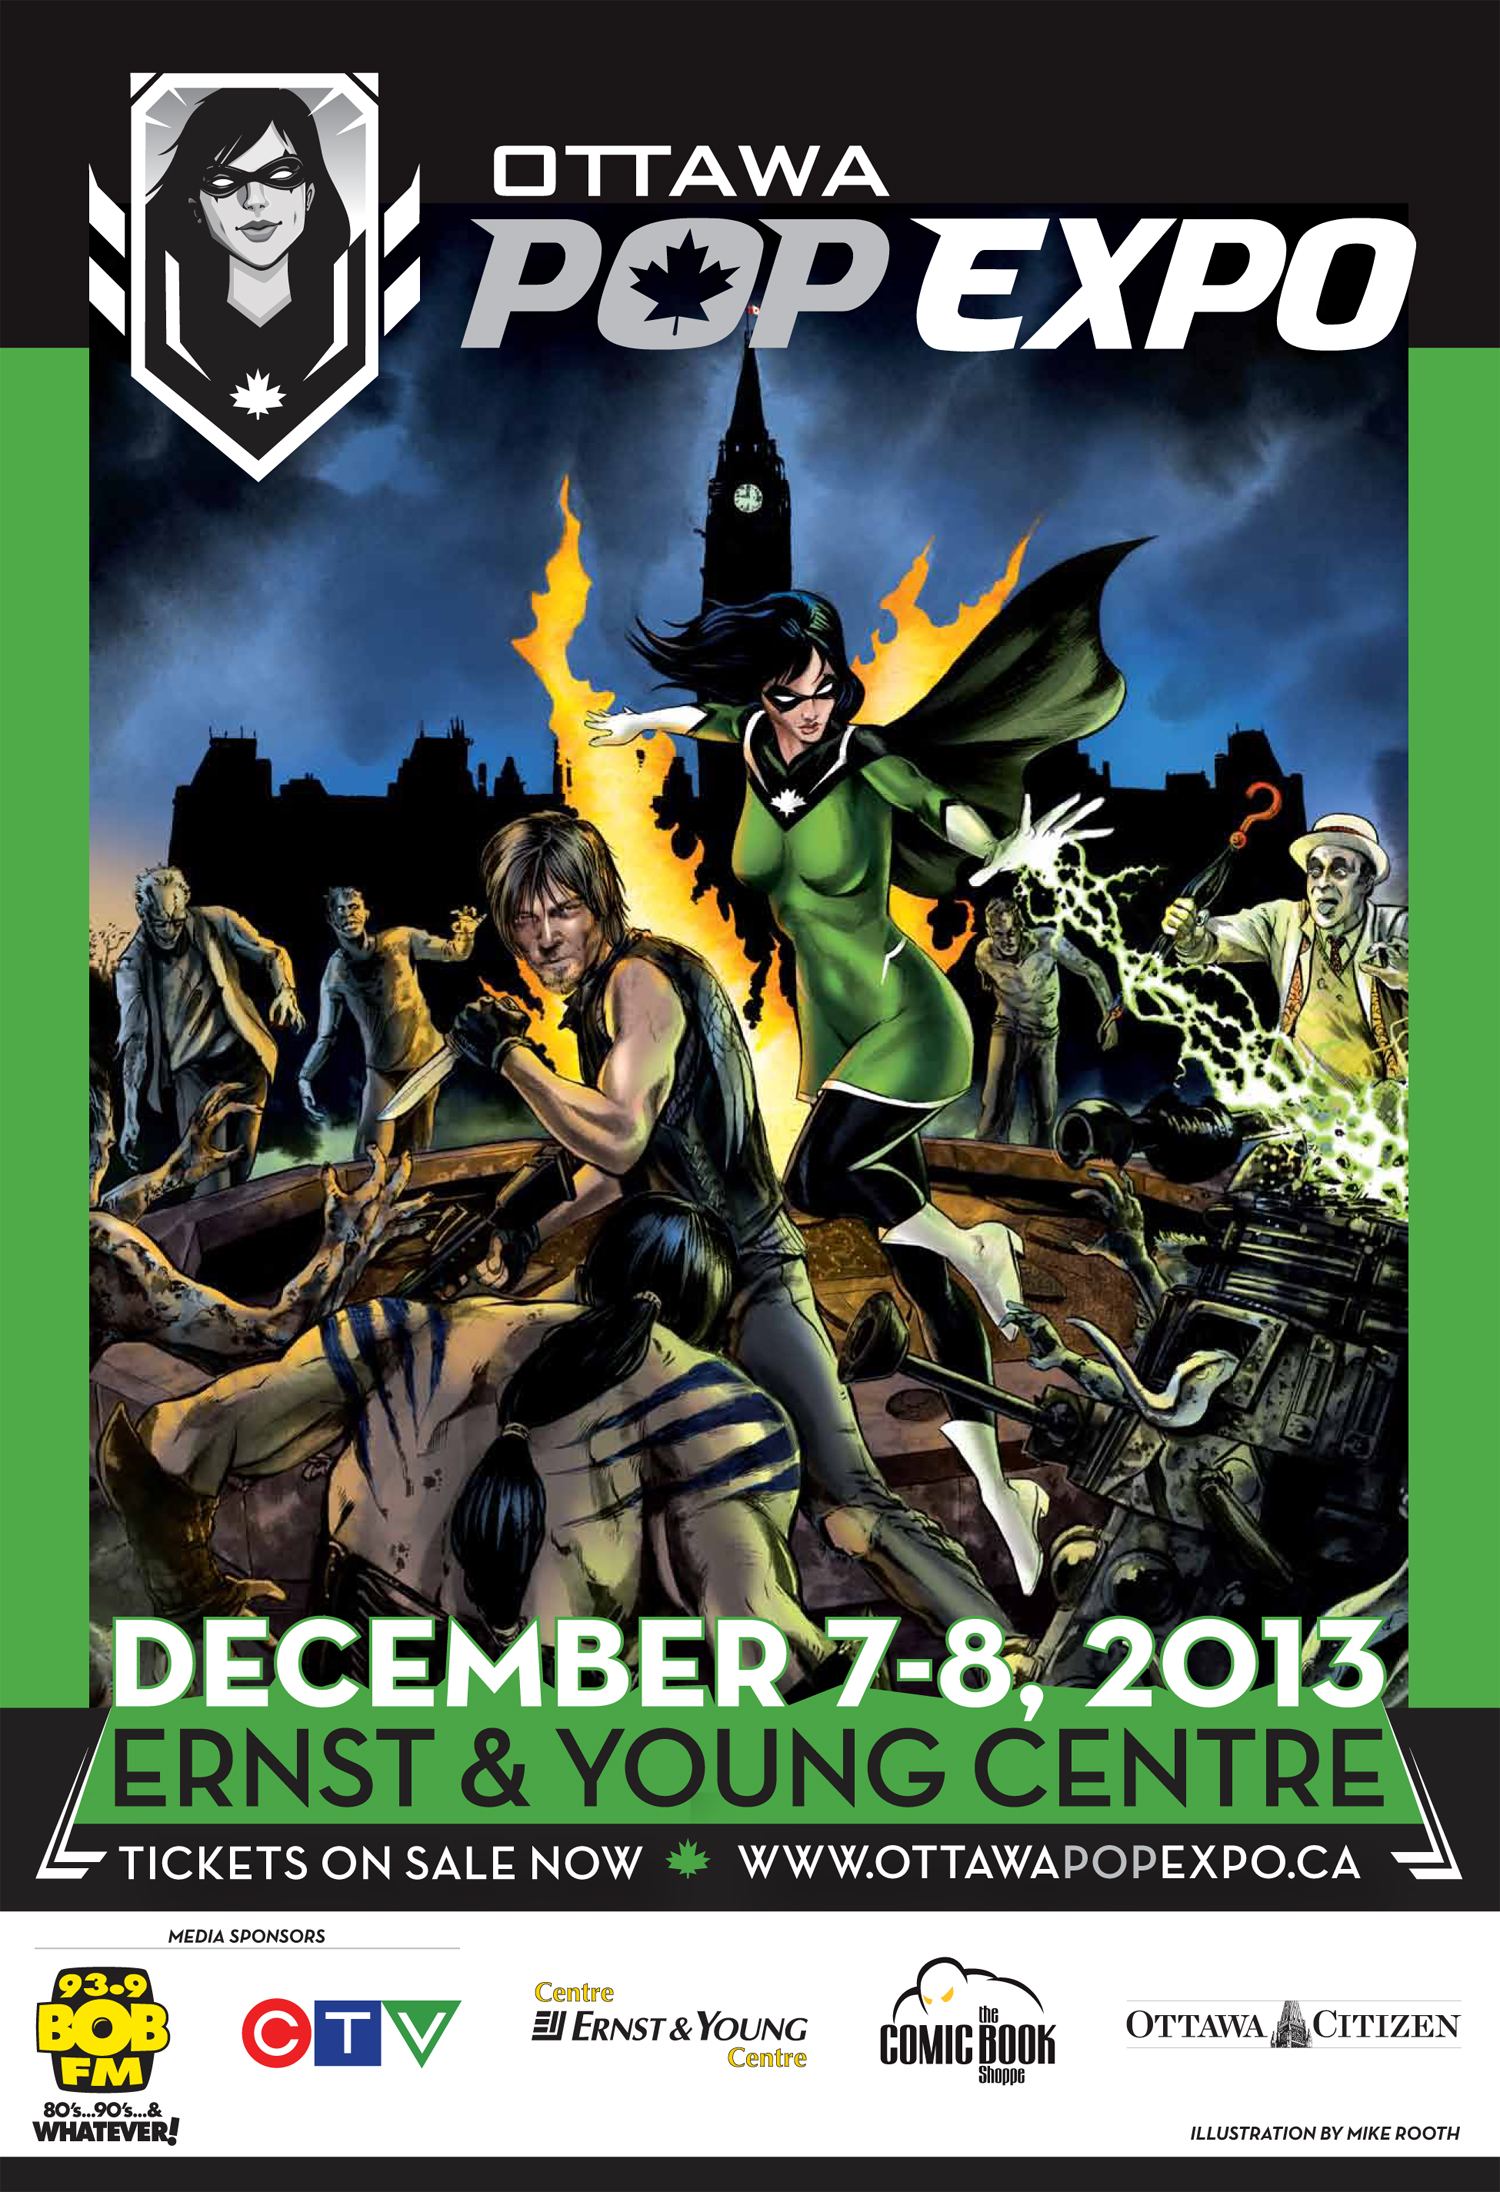 Poster for 2013 Ottawa Pop Expo